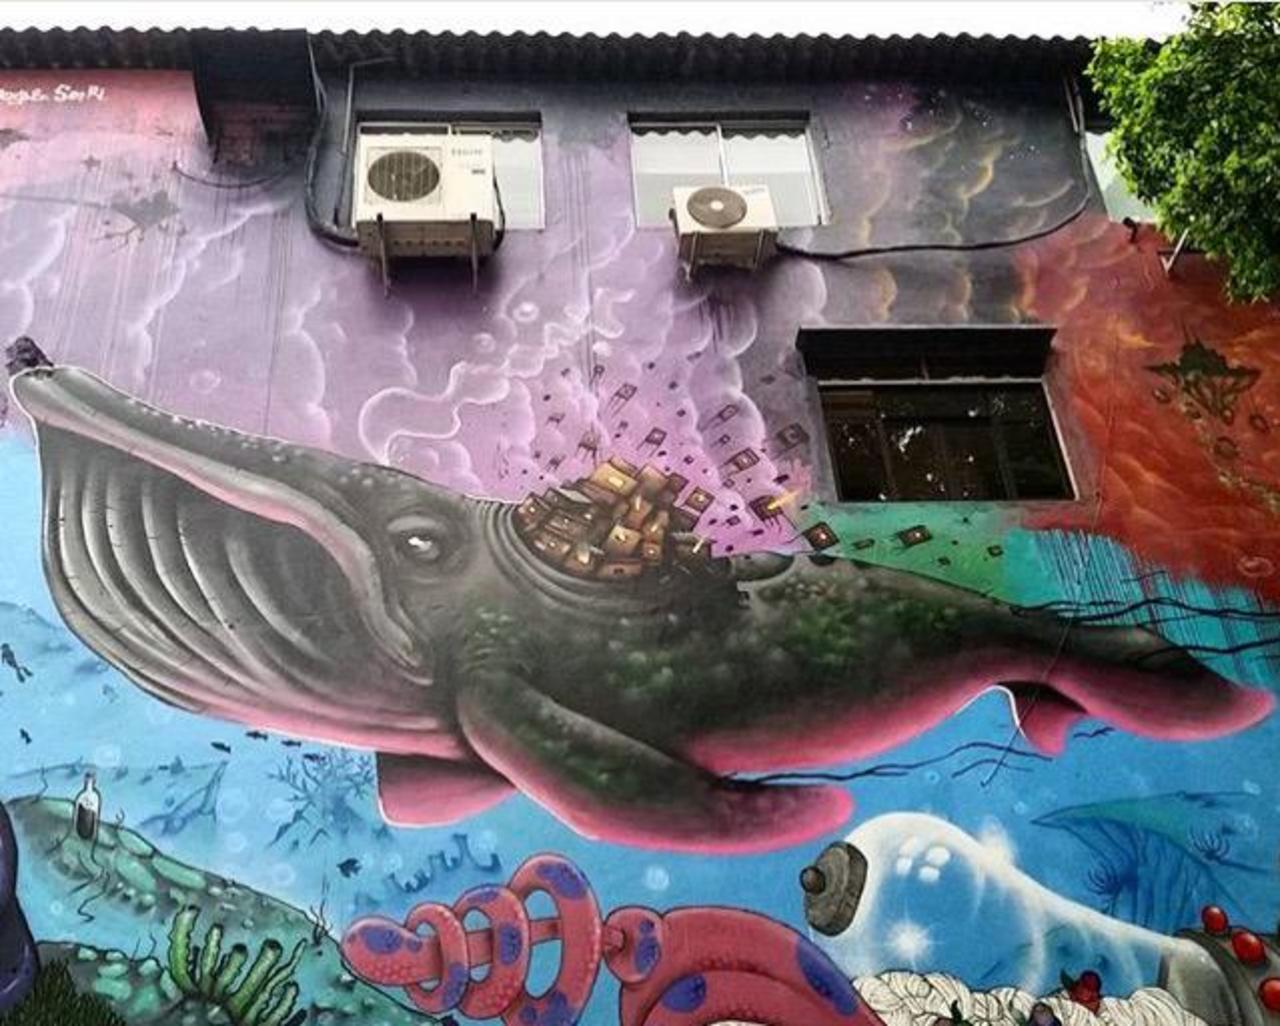 Street Art by joks_johnes Pinheiros, São Paulo 

#art #mural #graffiti #streetart http://t.co/I6AuUlsOZl